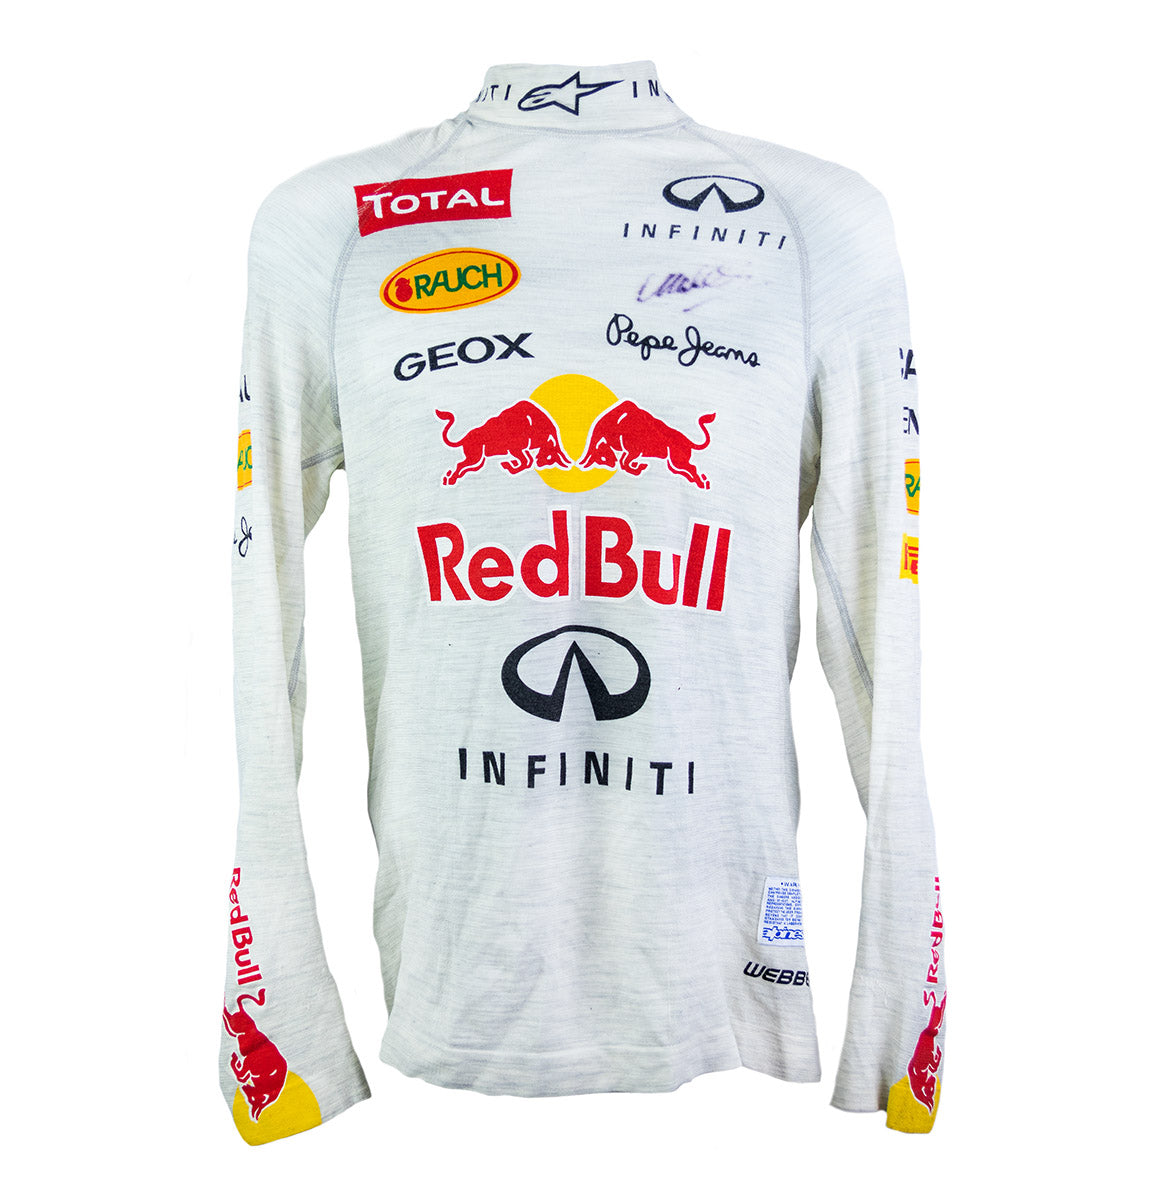 2012 Mark Webber Signed Race Used Red Bull Racing F1 Nomex Undershirt